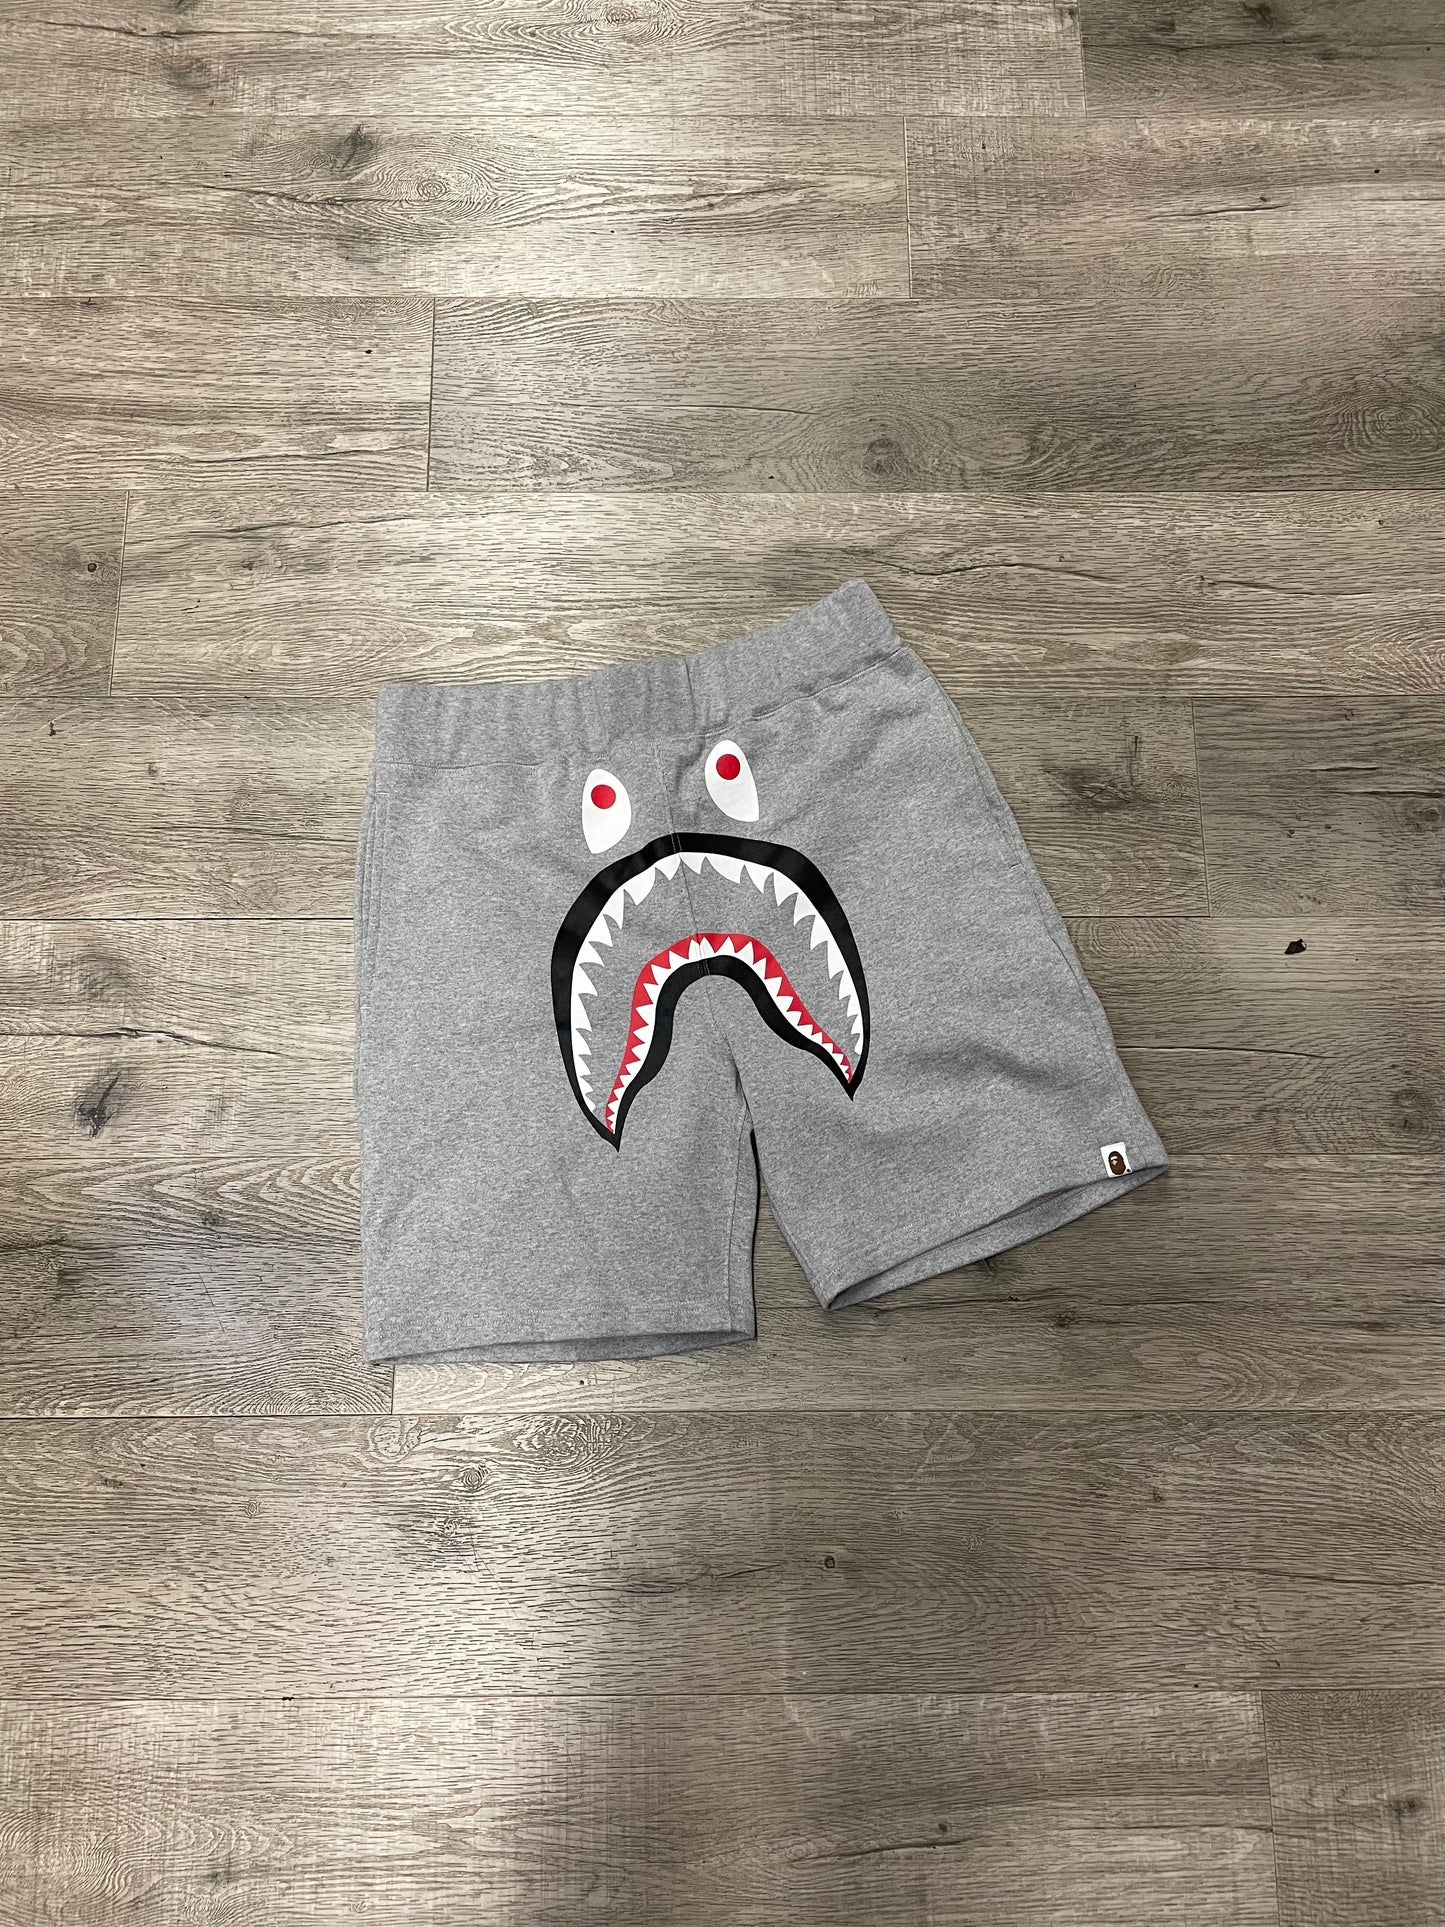 Bape Shark Shorts Grey